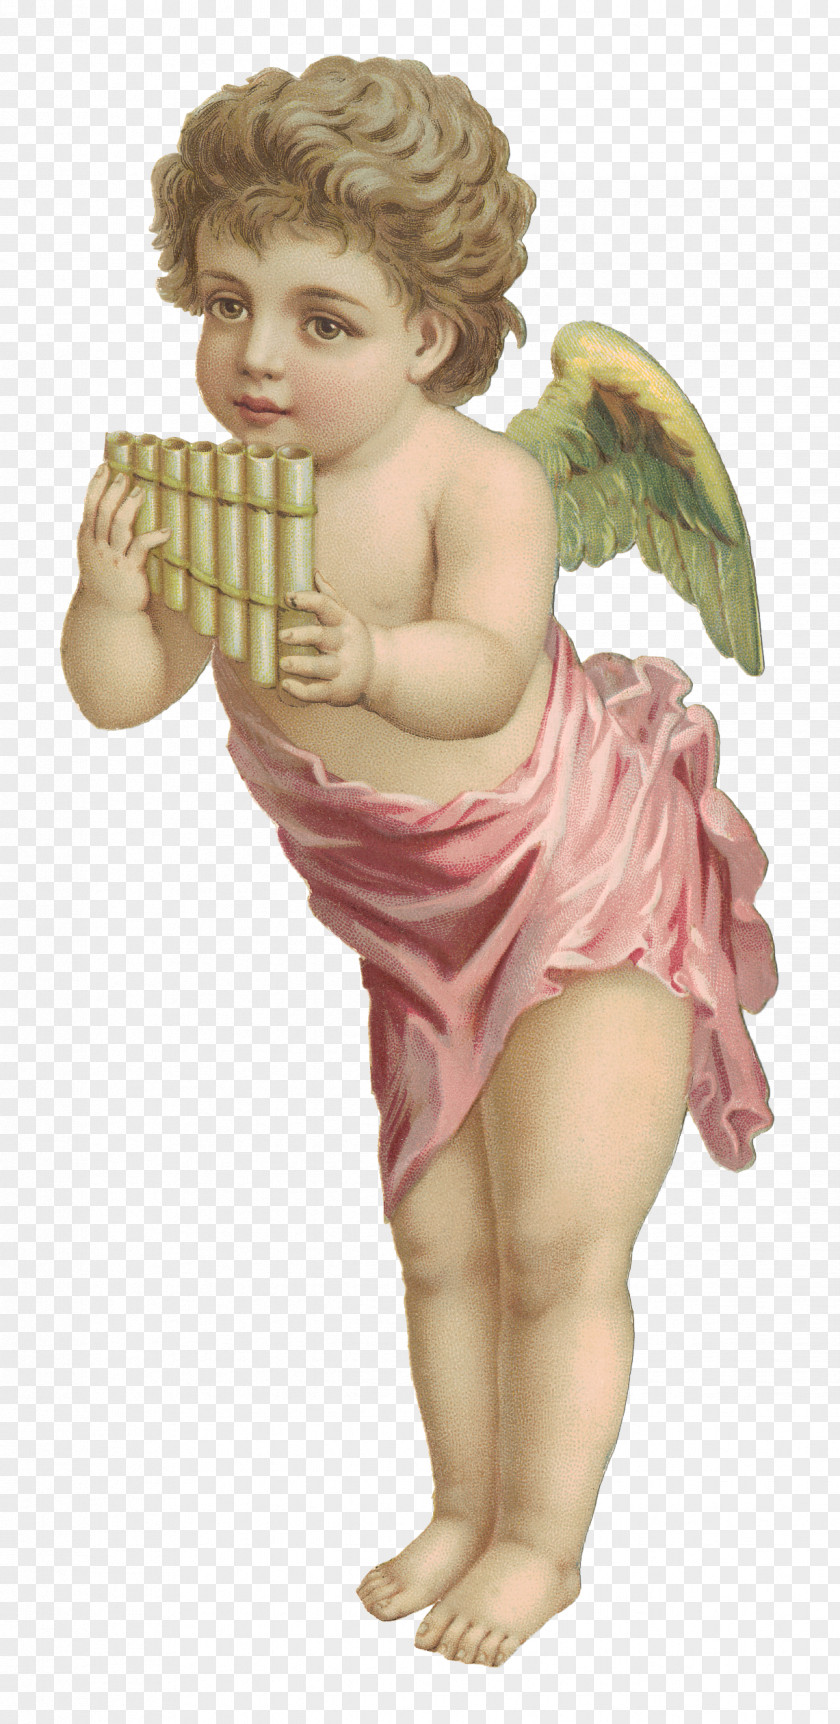 Angel Figurine Ceramic Massachusetts Institute Of Technology Toddler PNG